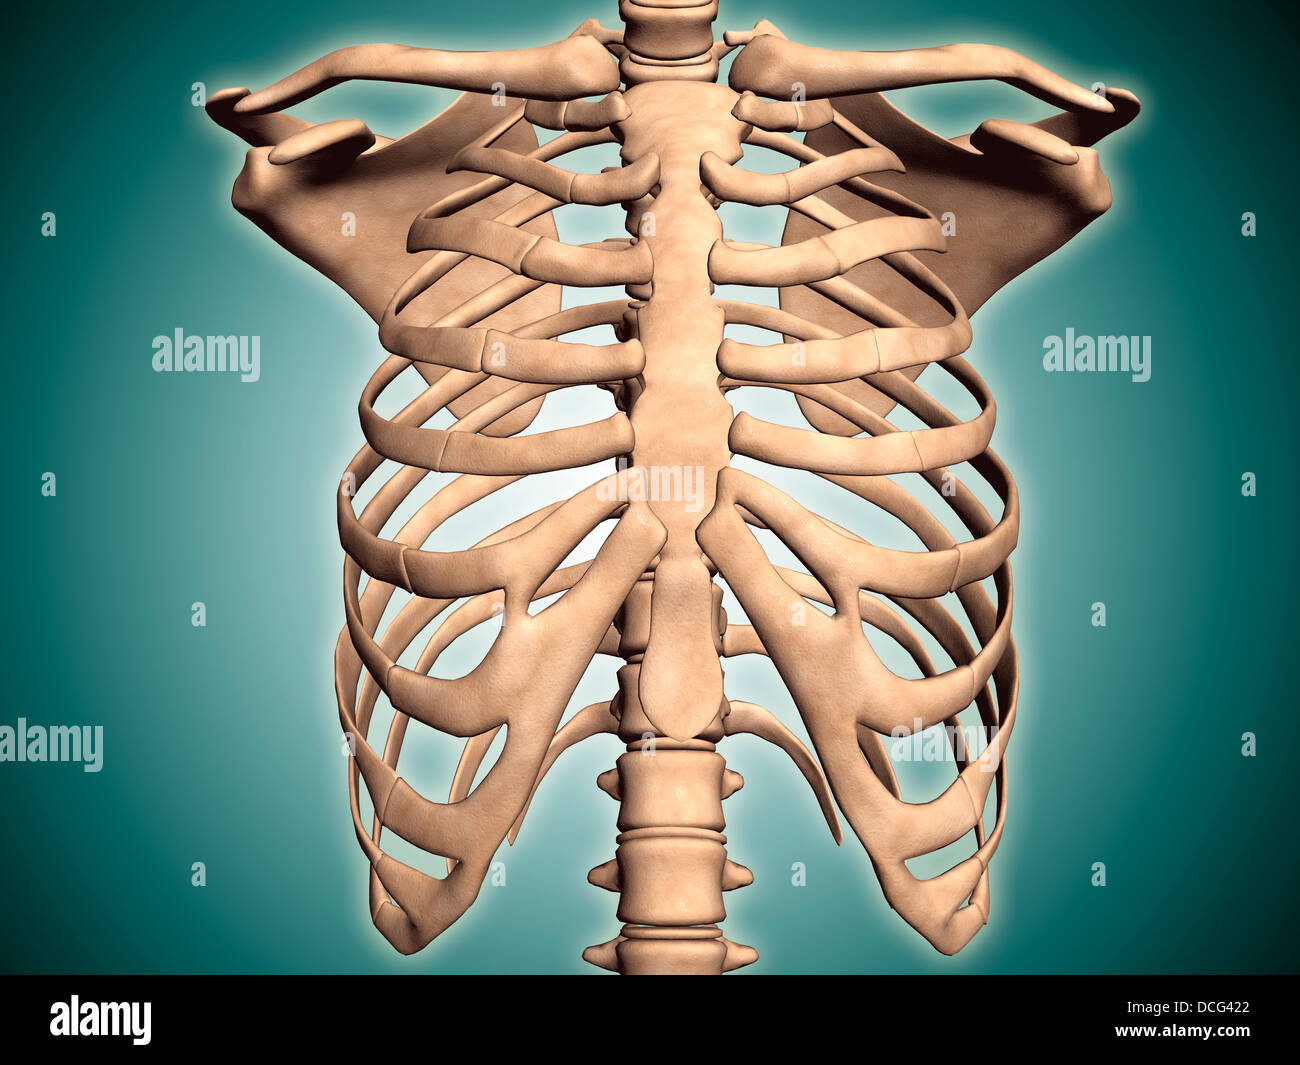 Close-up view of human rib cage Stock Photo, Royalty Free Image